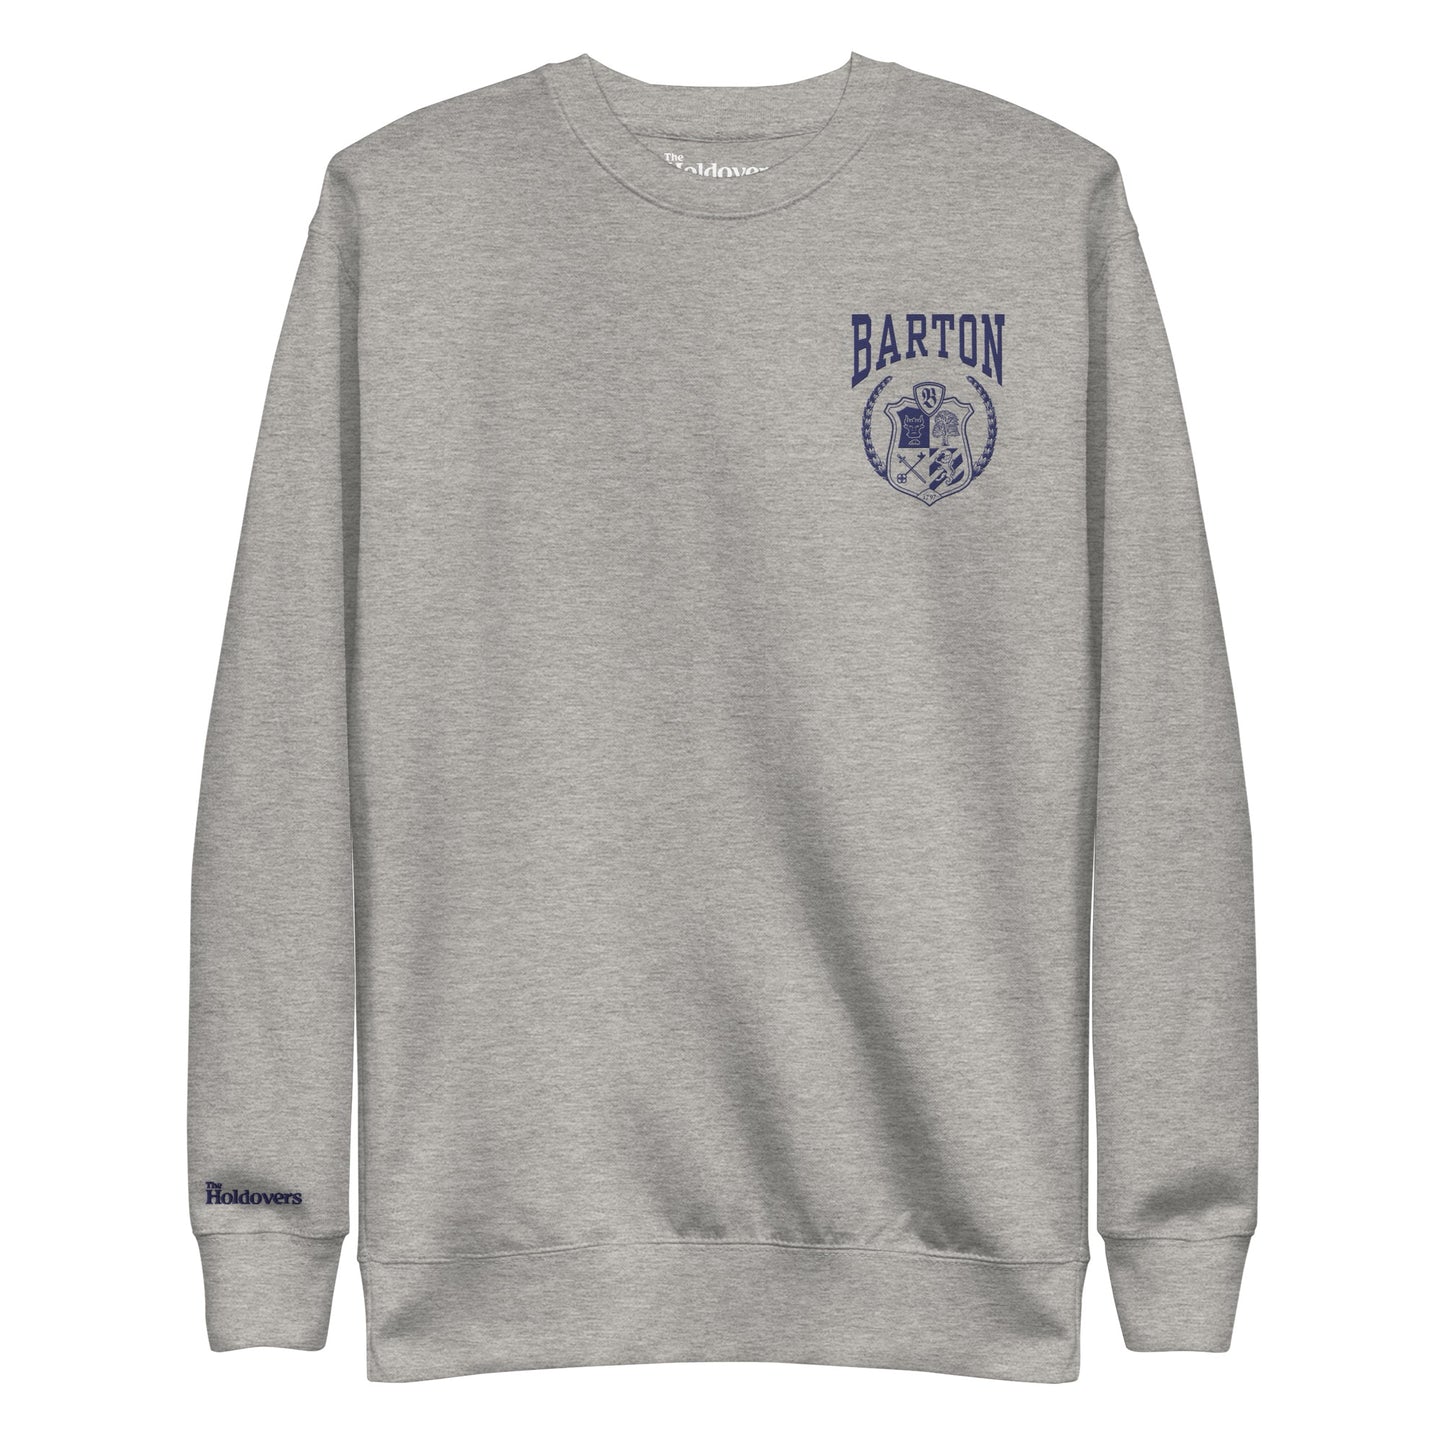 The Holdovers Barton Academy Embroidered Crewneck Sweatshirt